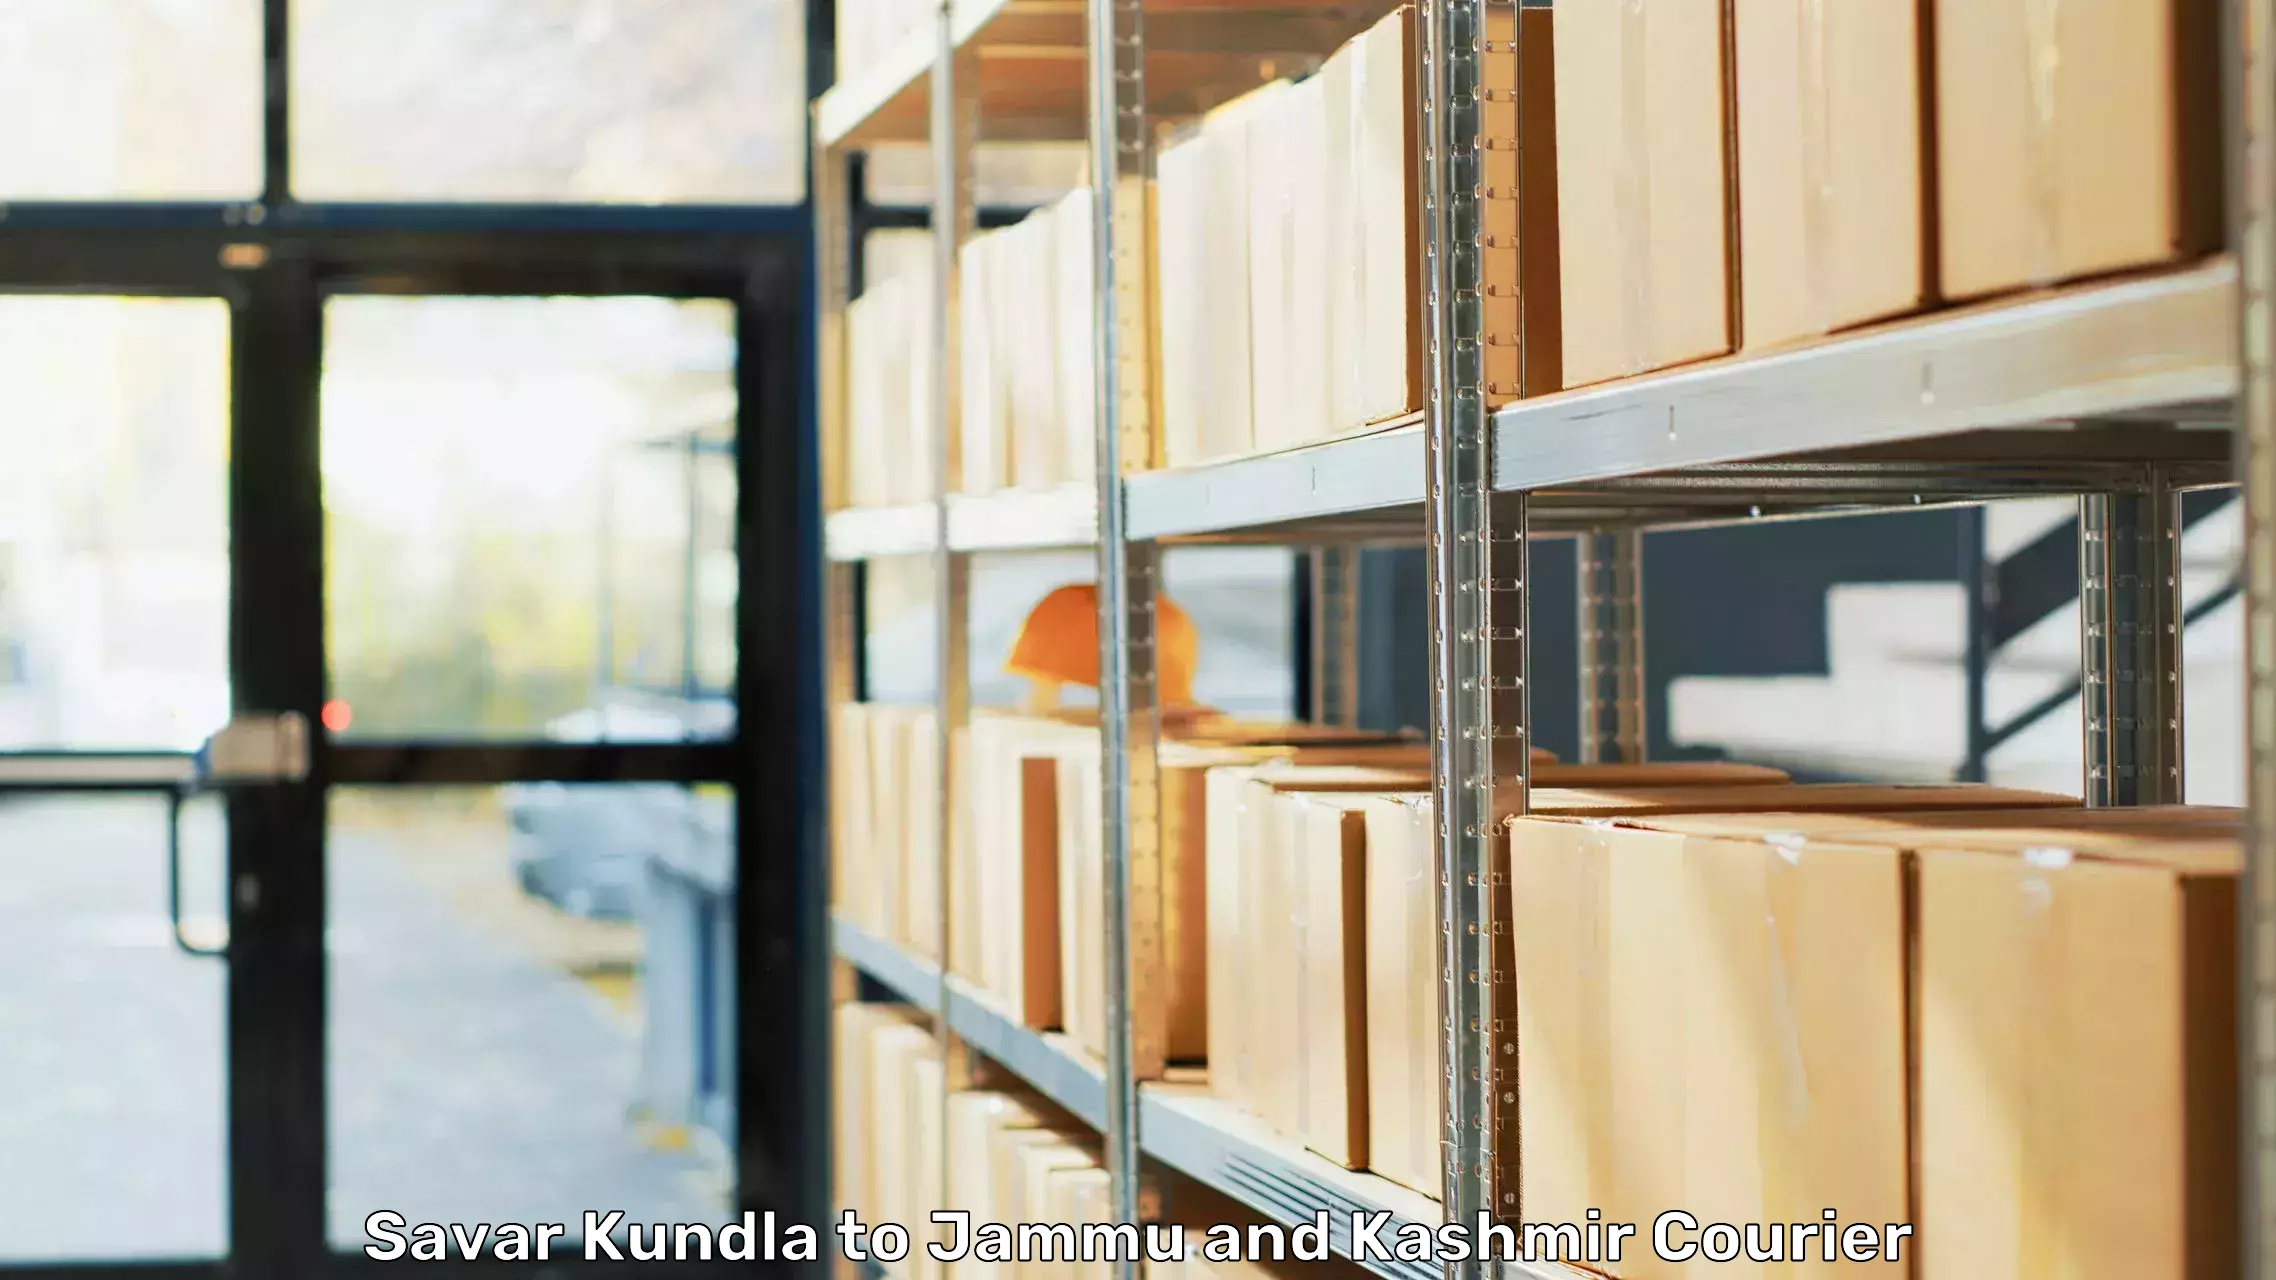 Furniture moving experts Savar Kundla to Srinagar Kashmir